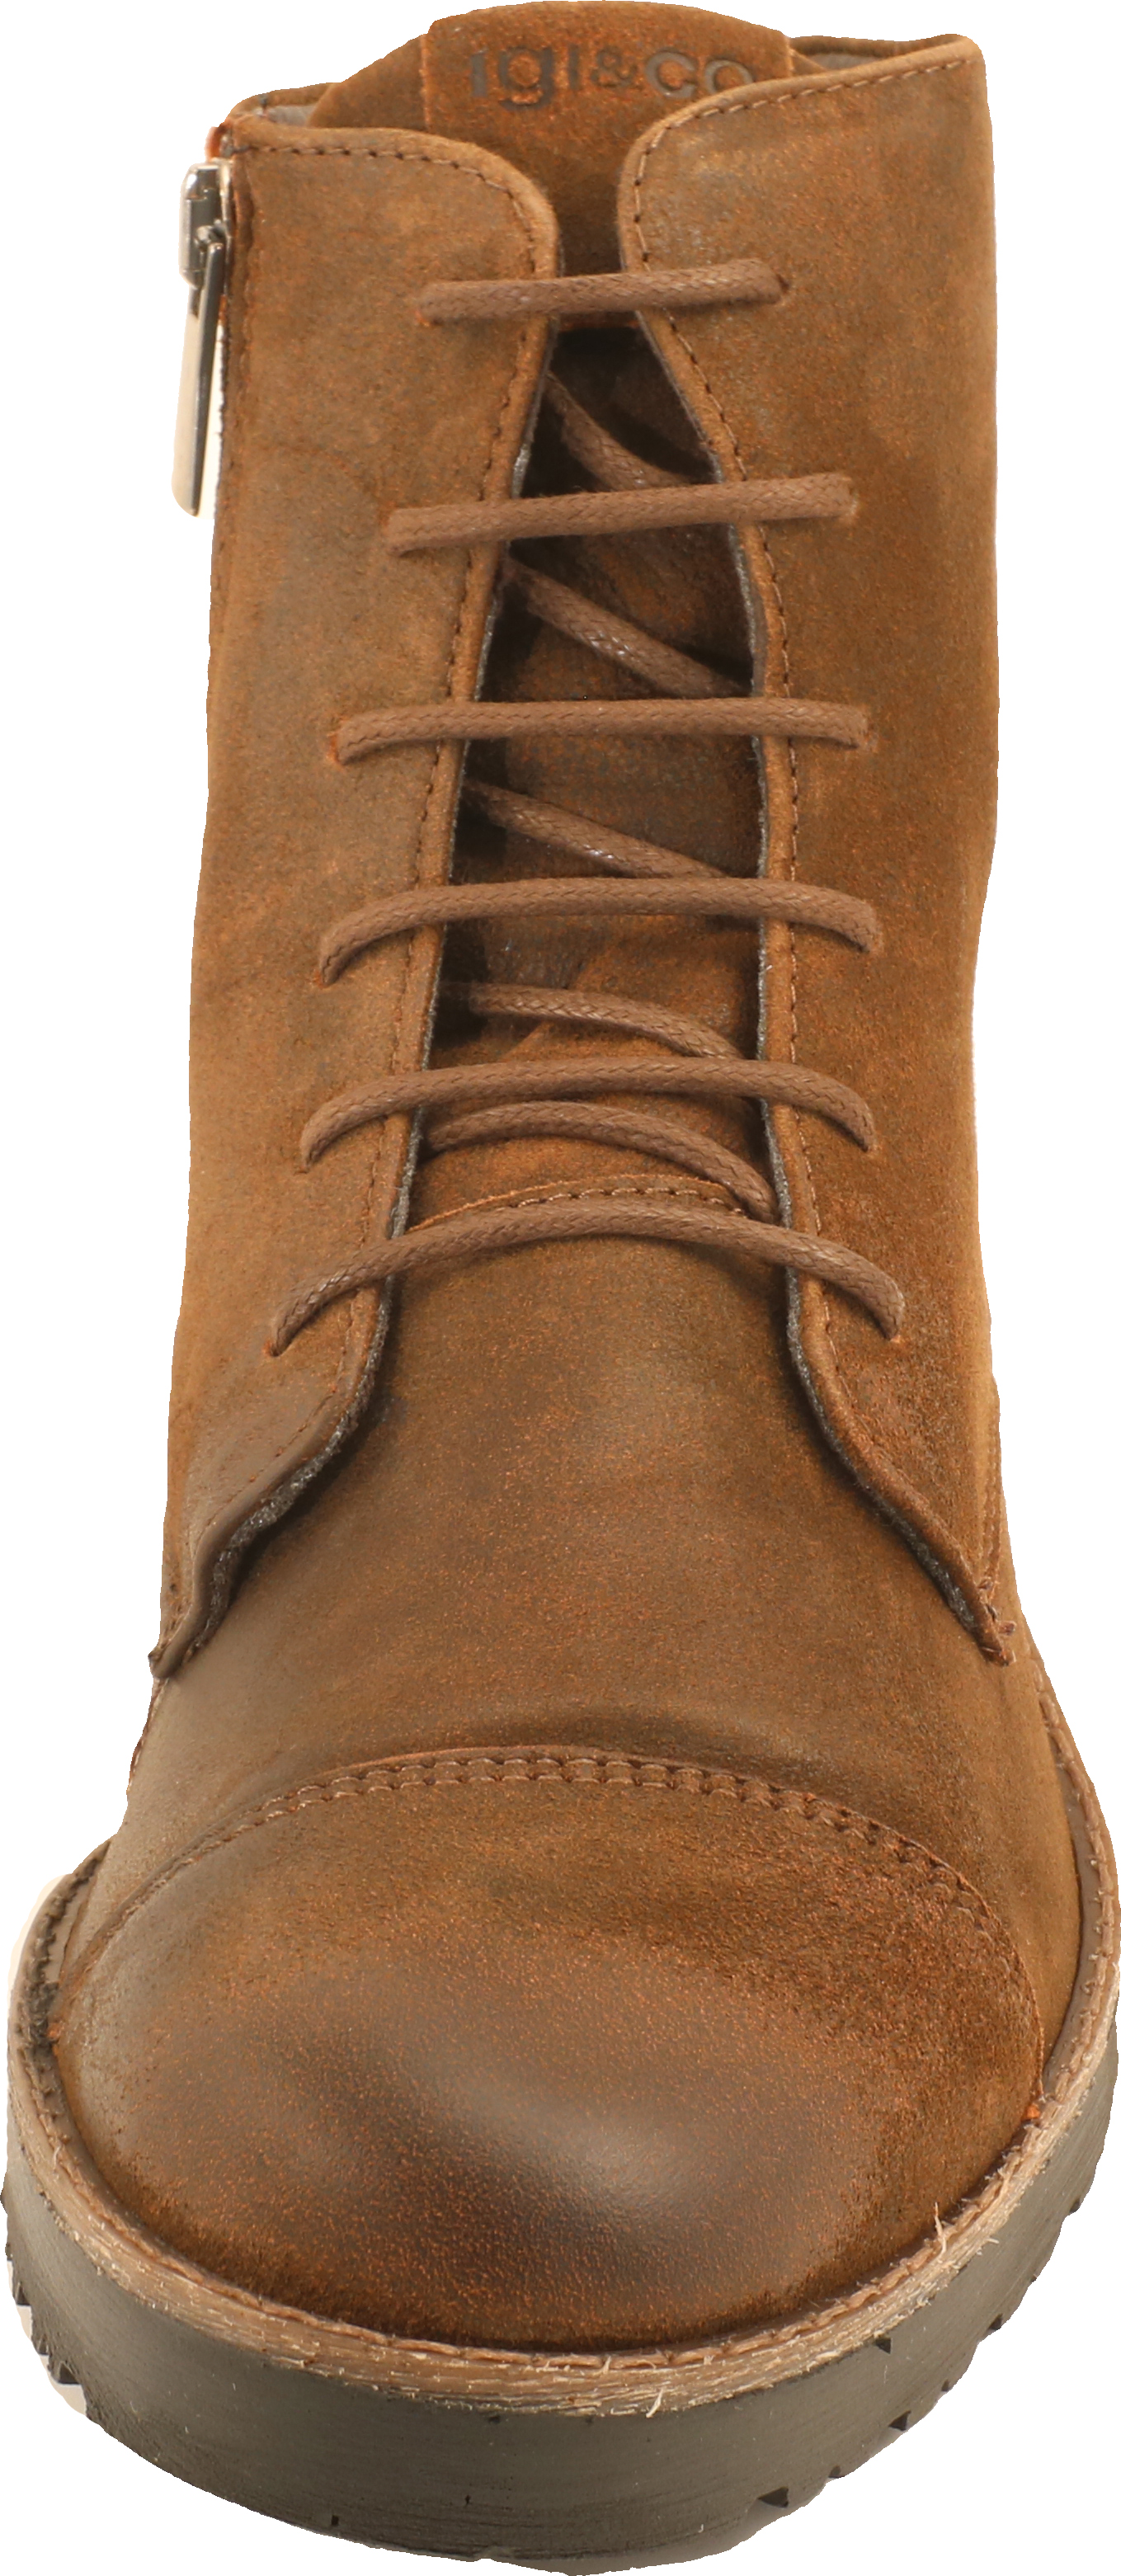 DBR 81504 - Brown Leather